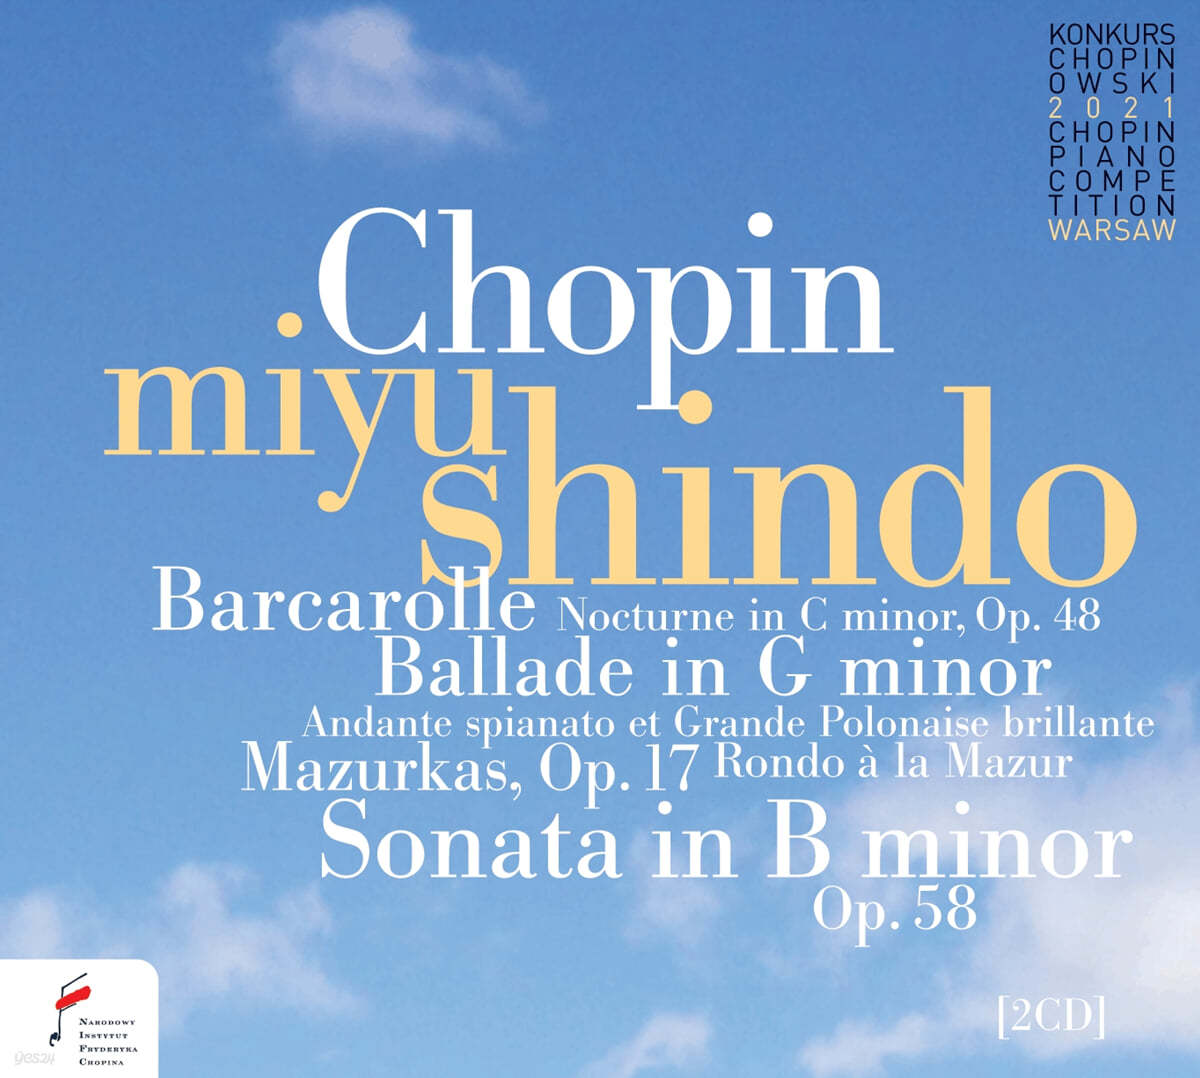 Miyu Shindo 2021년 쇼팽 콩쿨 실황 (Chopin - 2021 Chopin Piano Competition Warsaw)